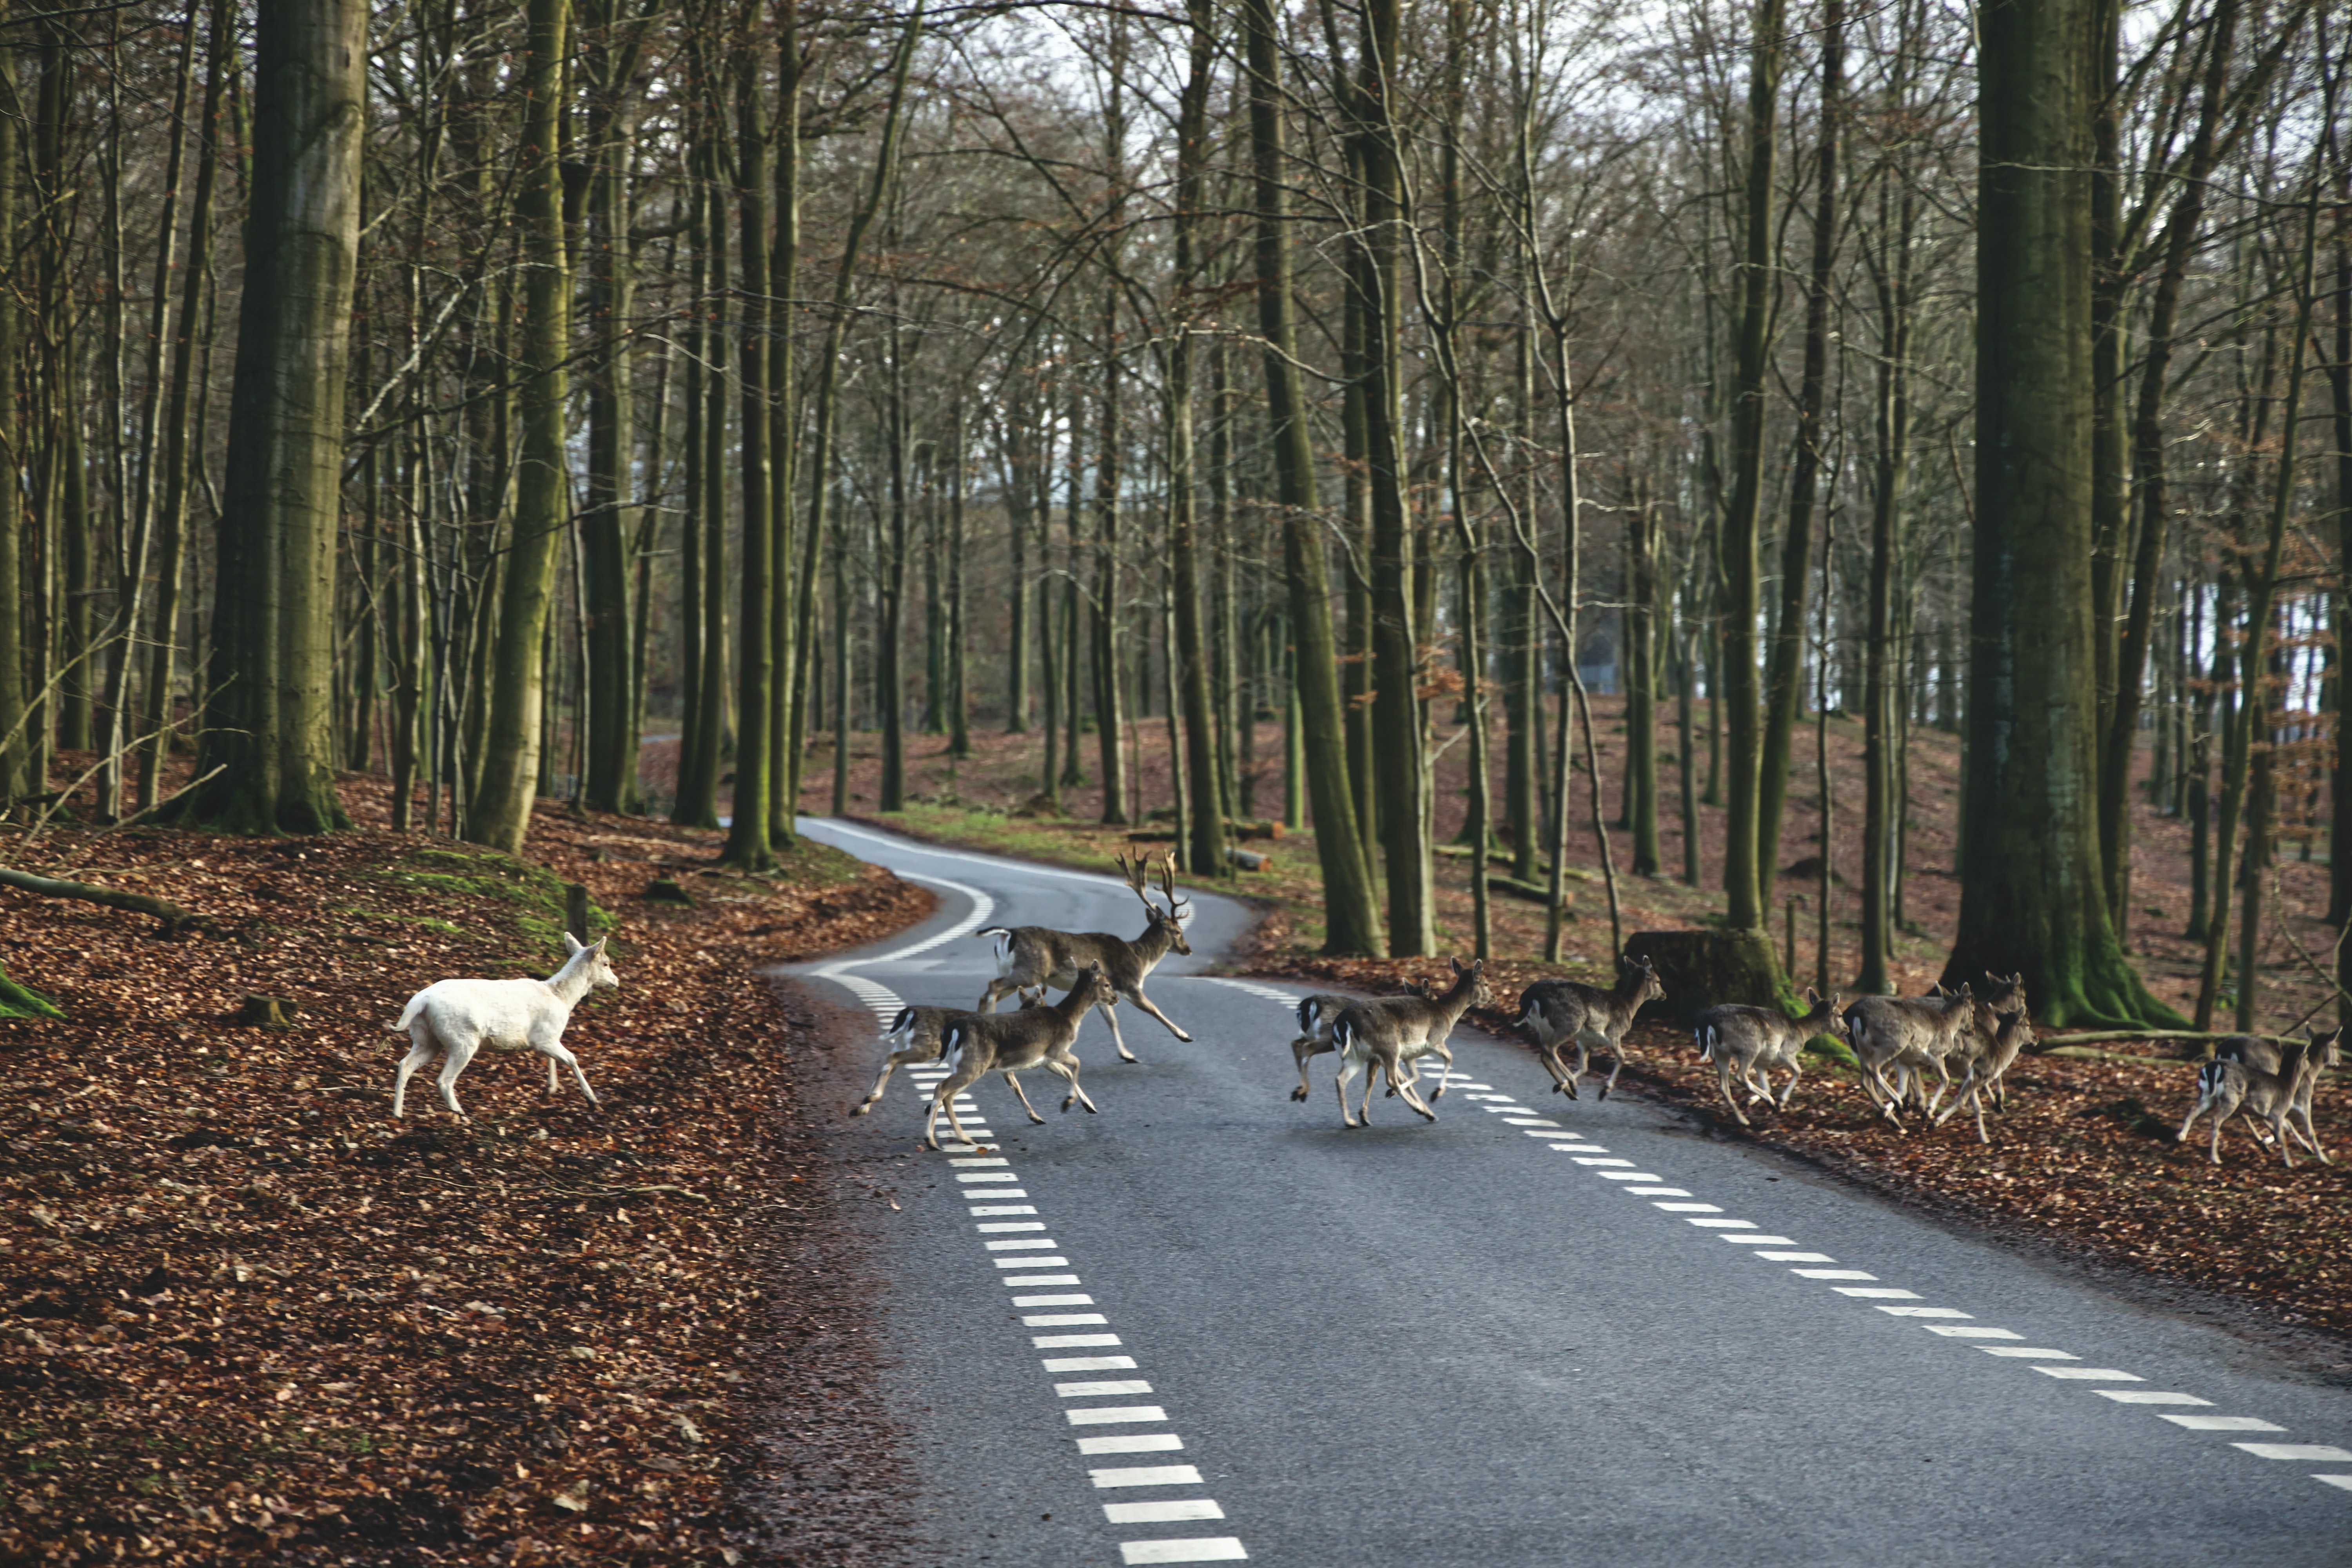 animals crossing